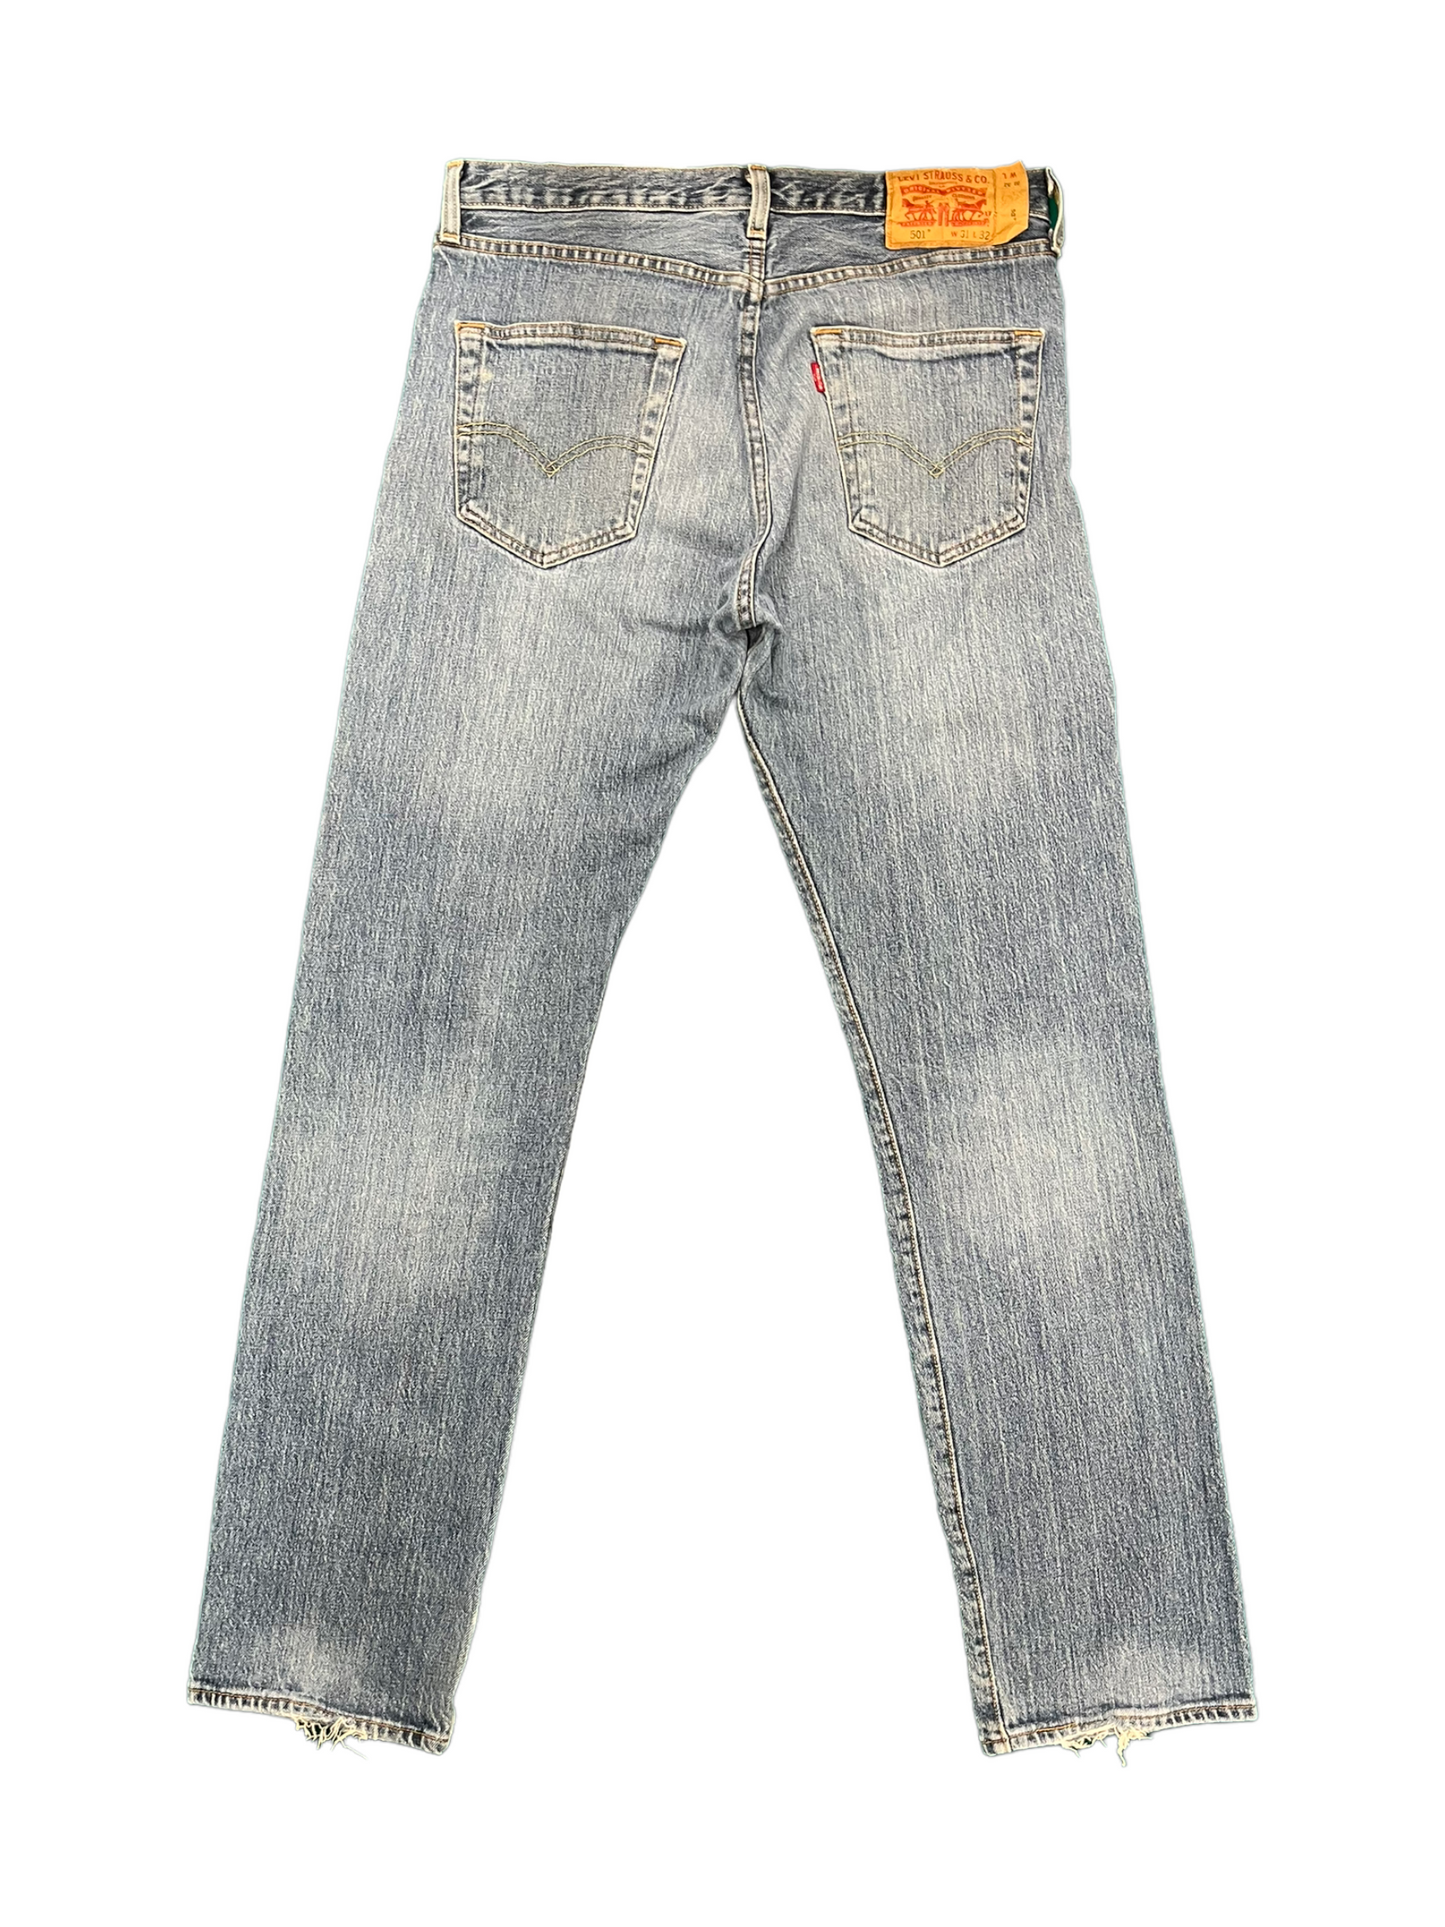 Mens Distressed Levi Straight Leg Jeans - Waist 31" Length 32"